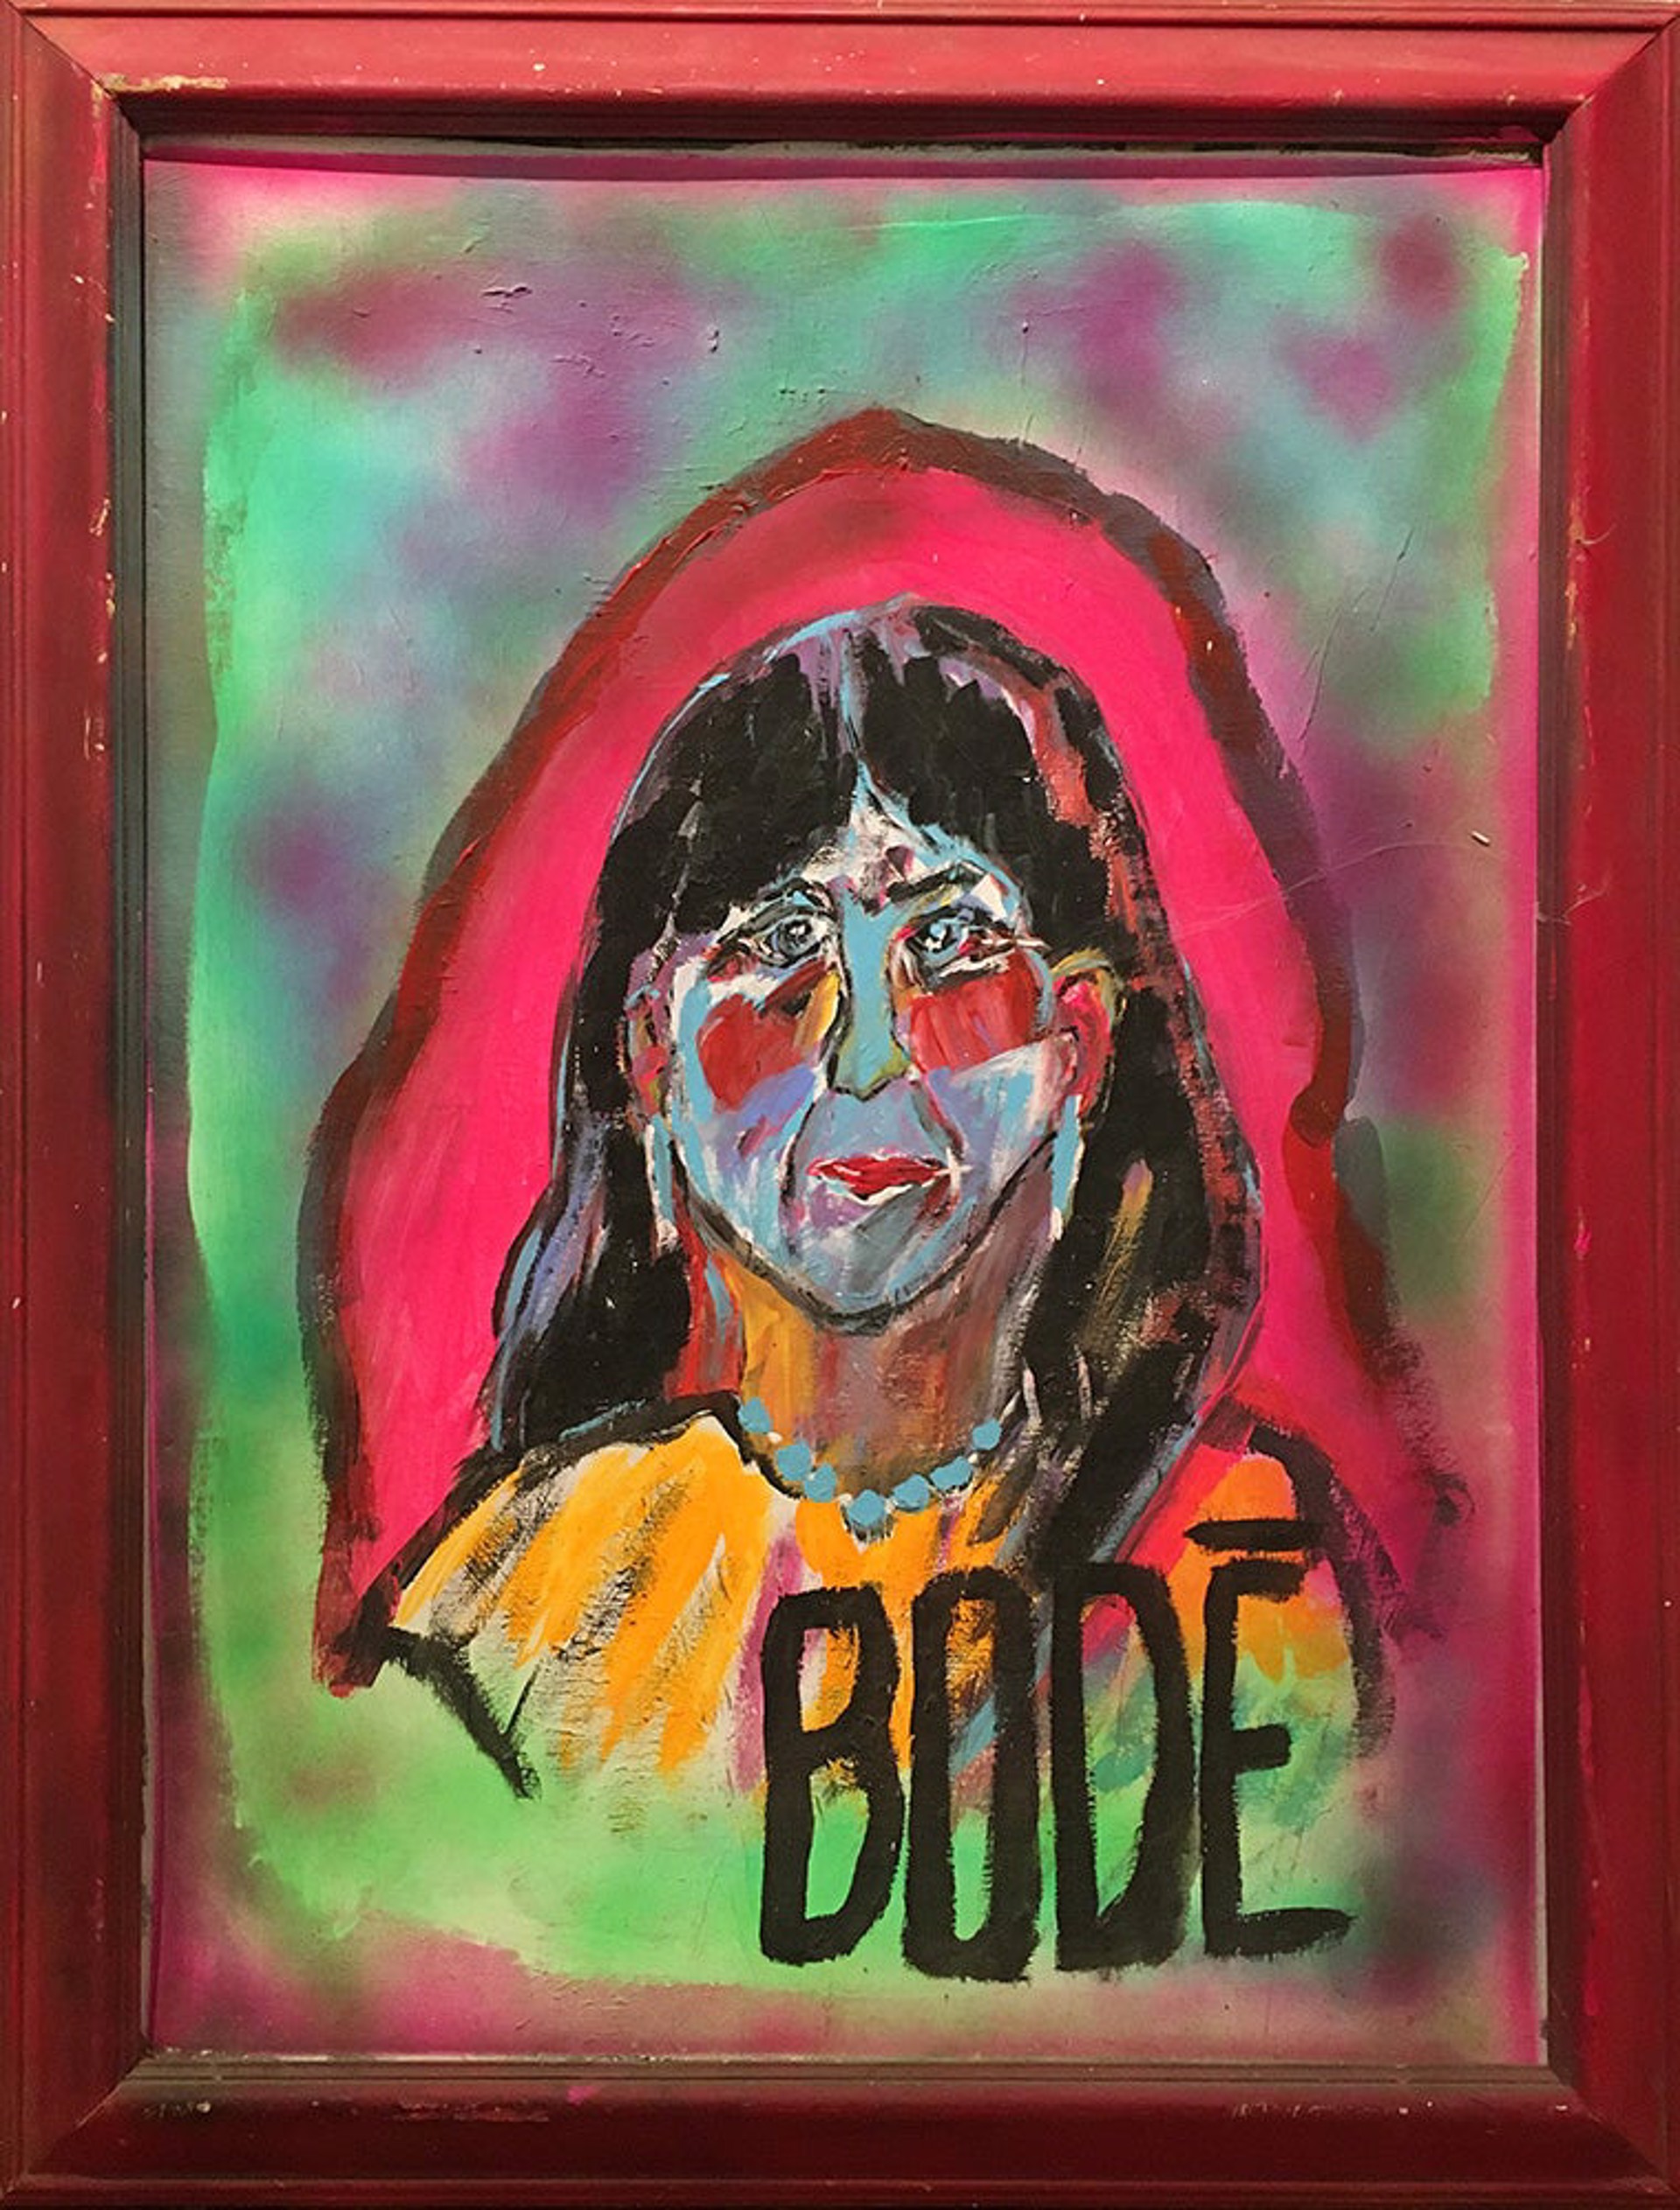 BODE #1125 by Rodney Bode